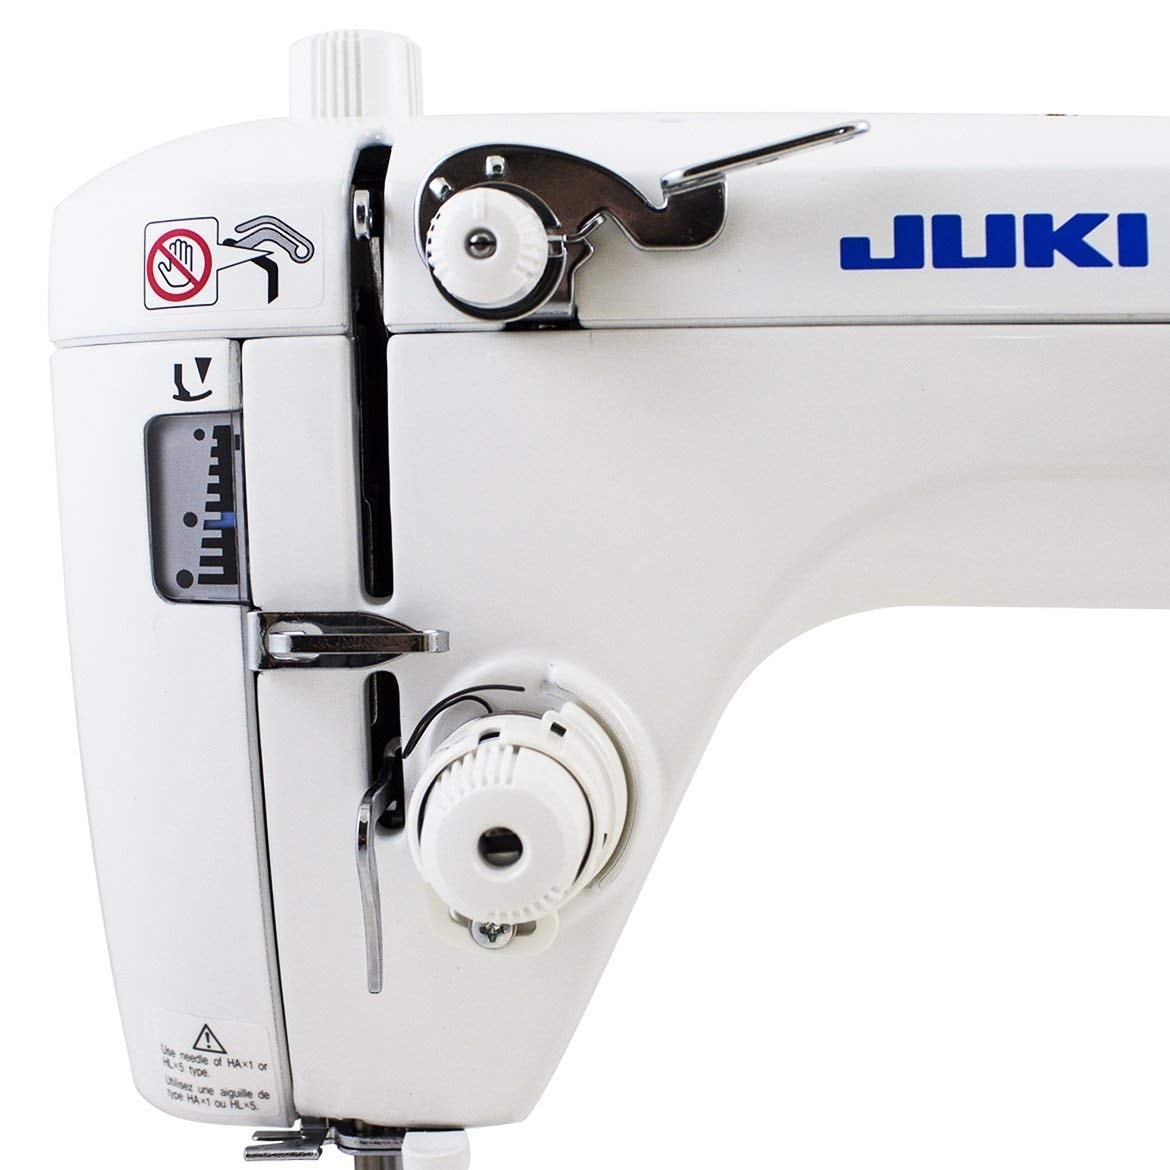 Juki TL-2010Q Sewing & Quilting Machine - Bed Bath & Beyond - 27095385